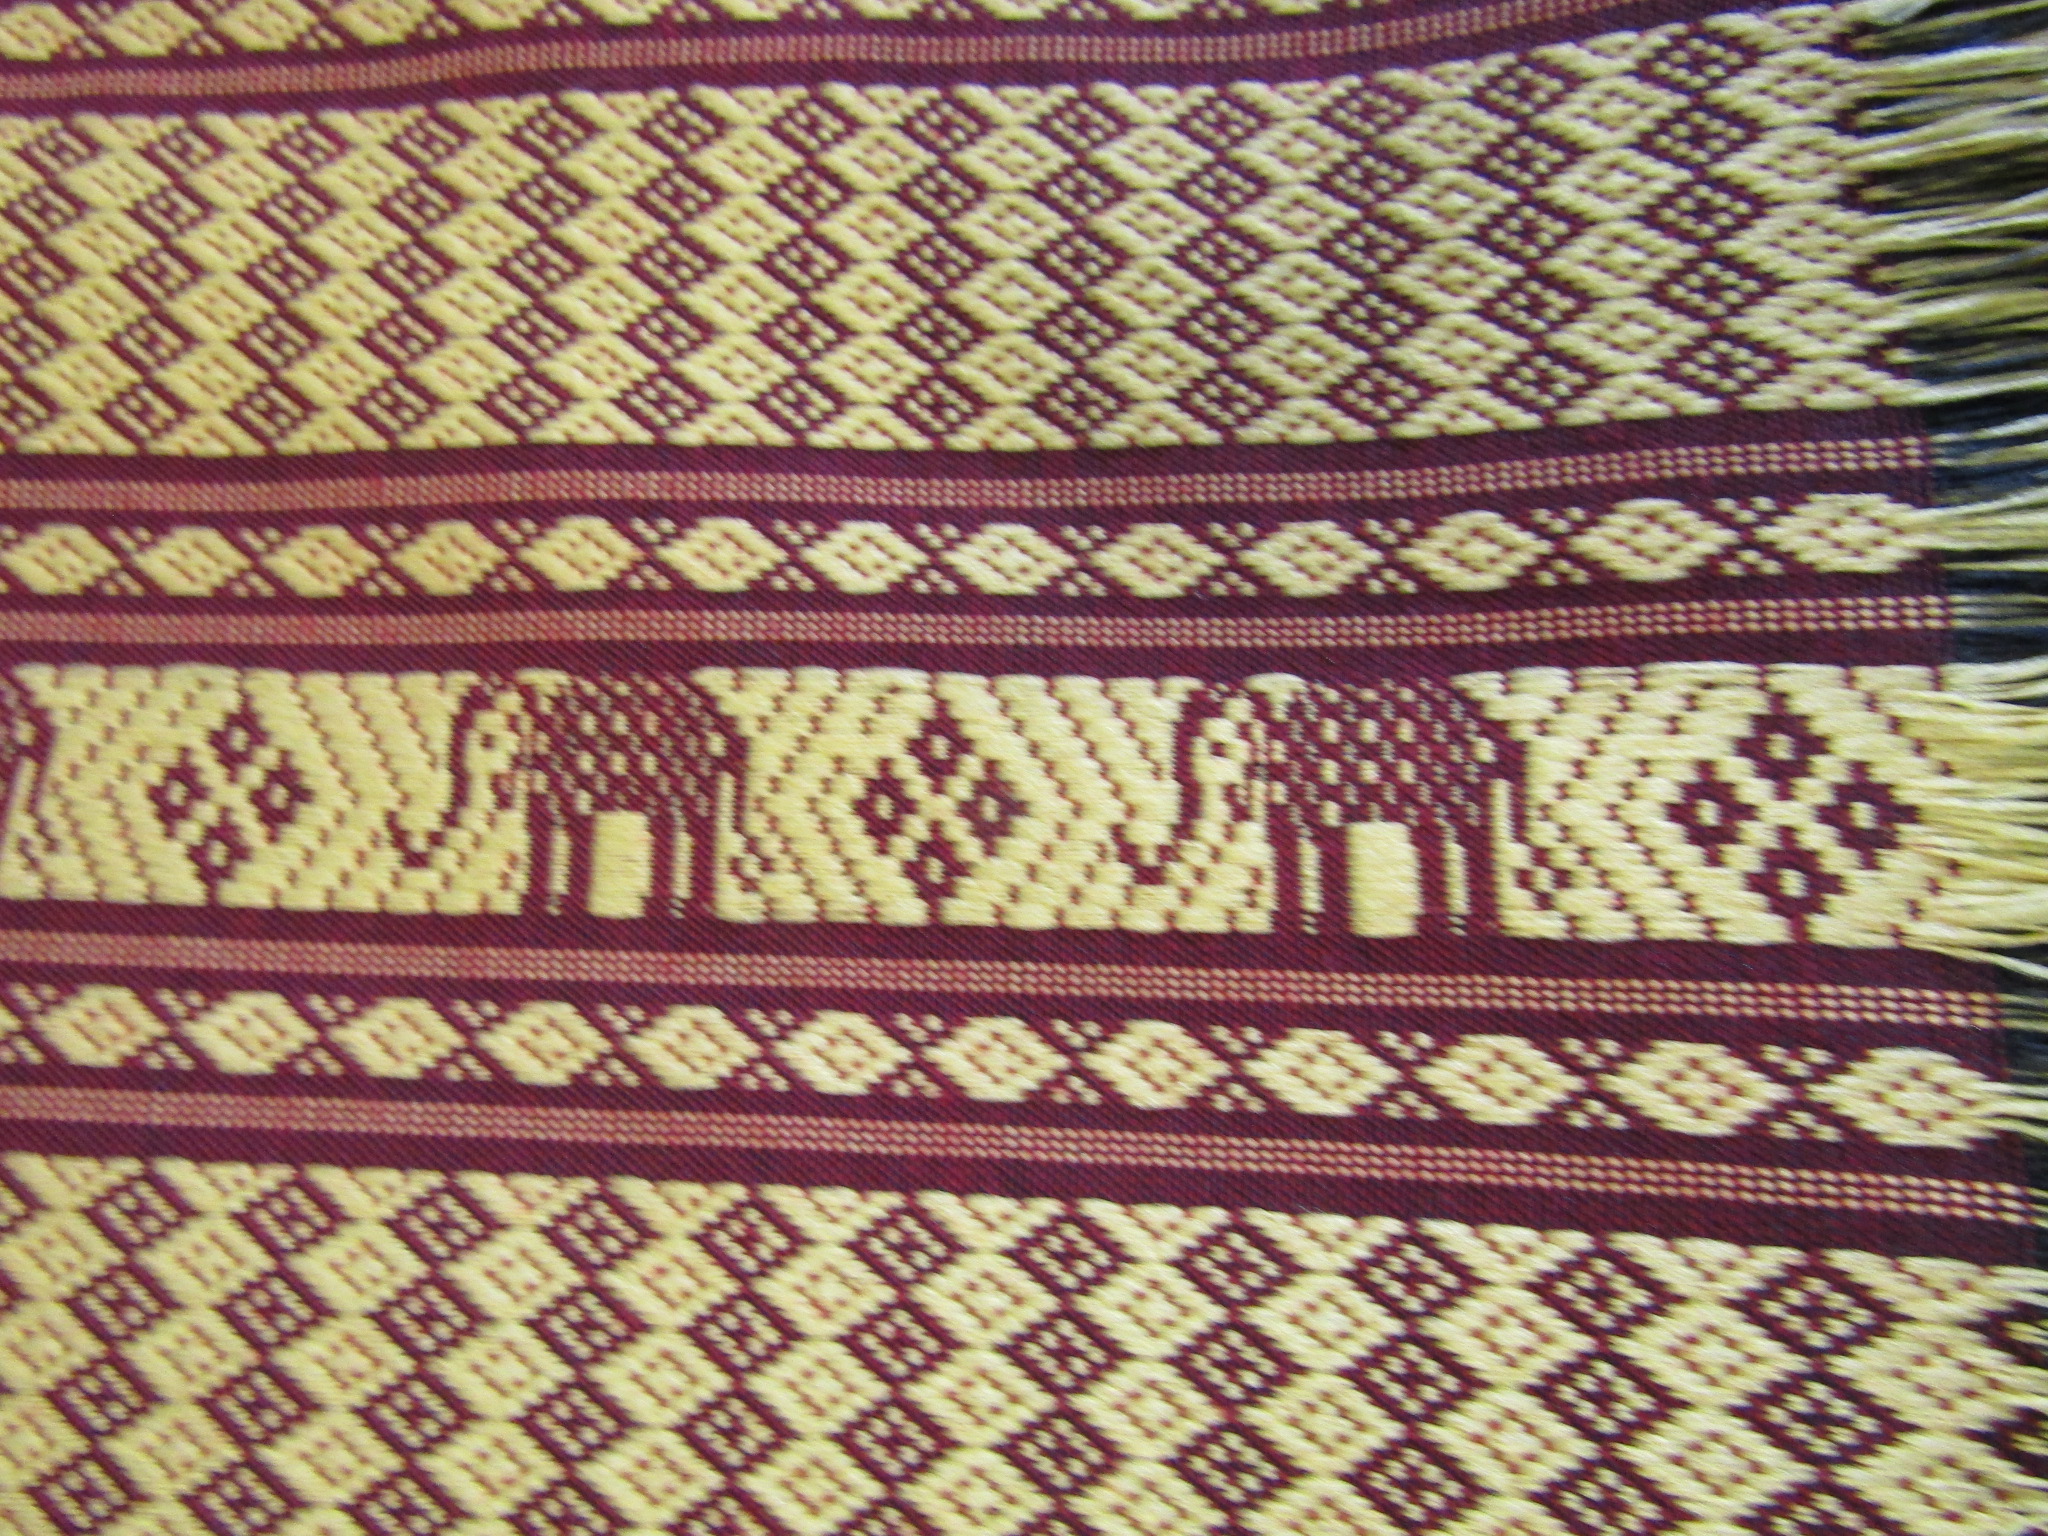 Thai elephant table cloth - Image 2 of 4